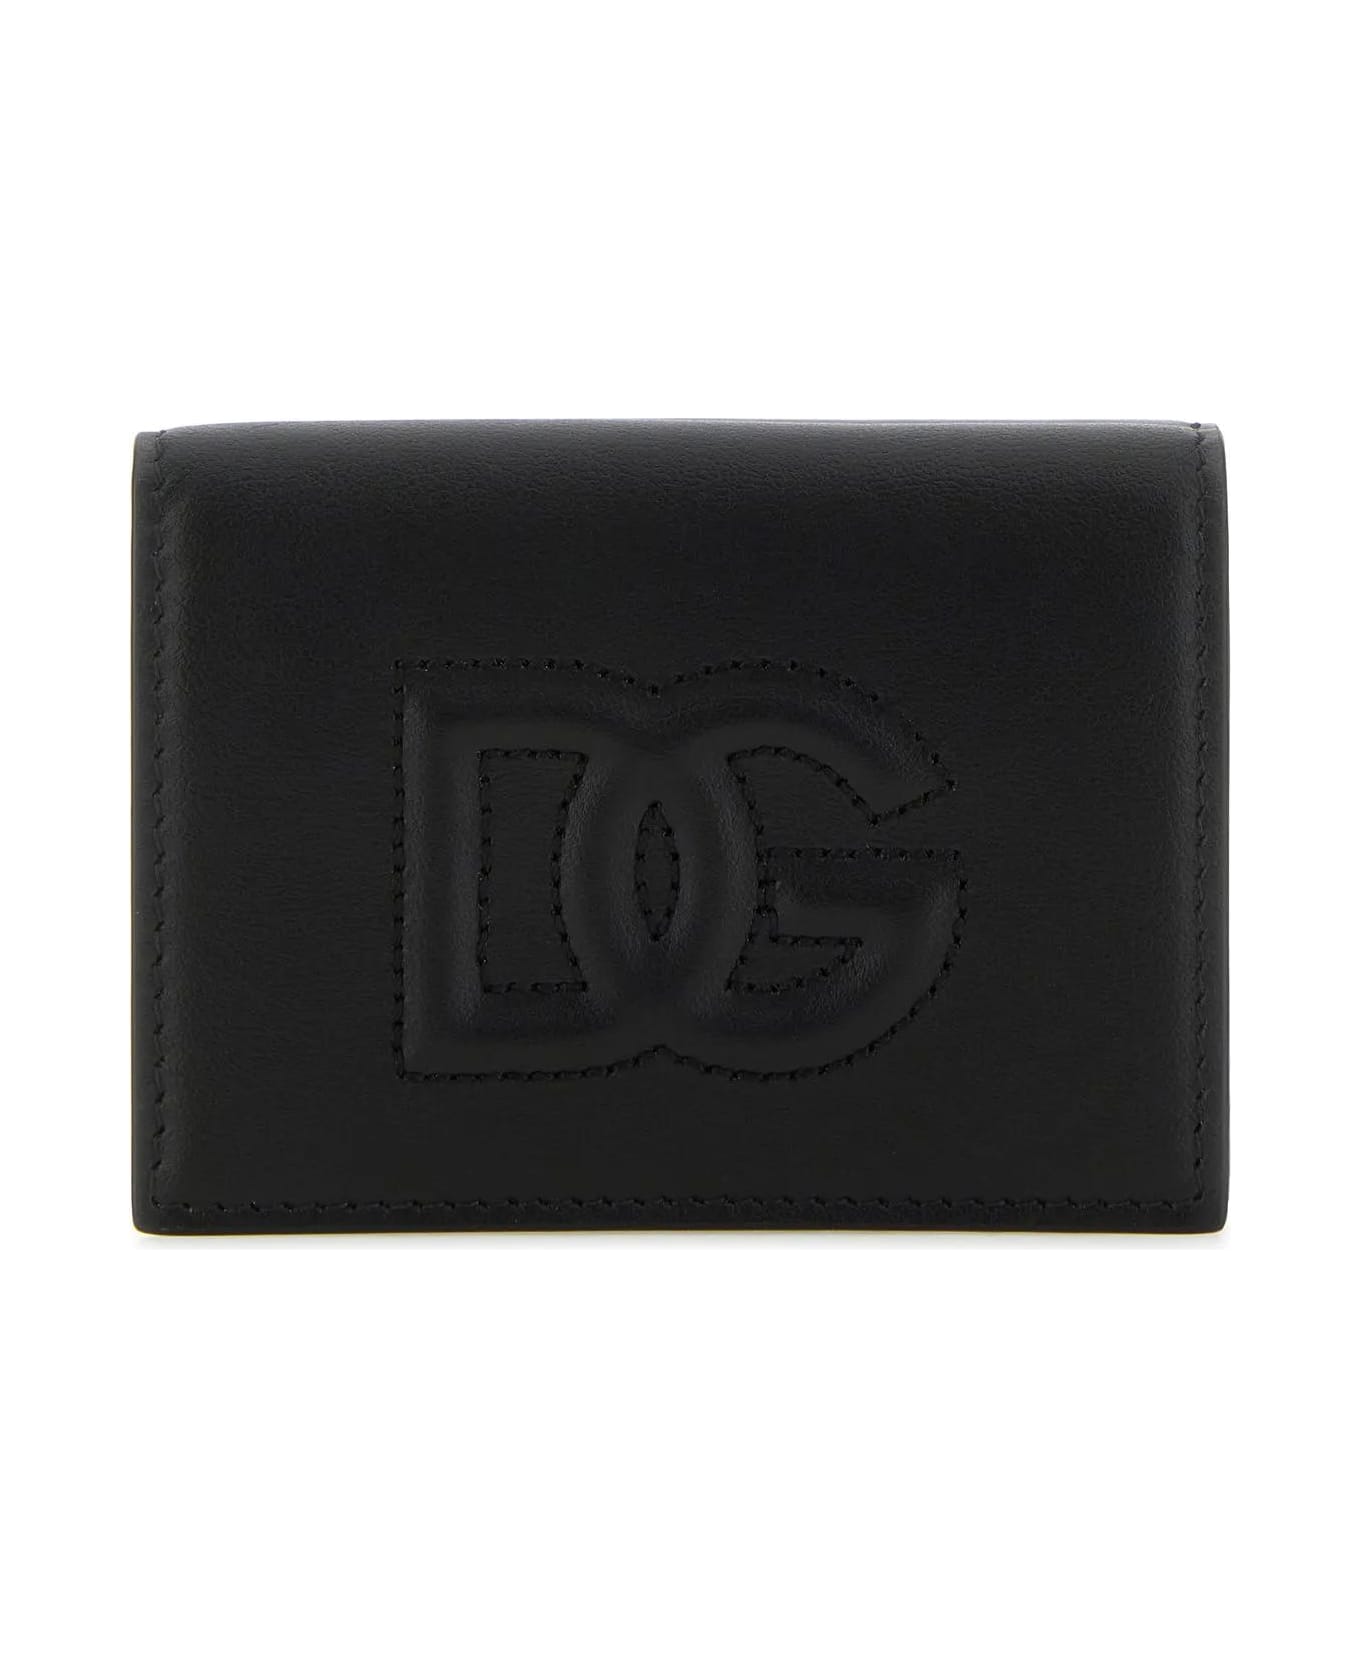 Dolce & Gabbana Black Leather Wallet - Black